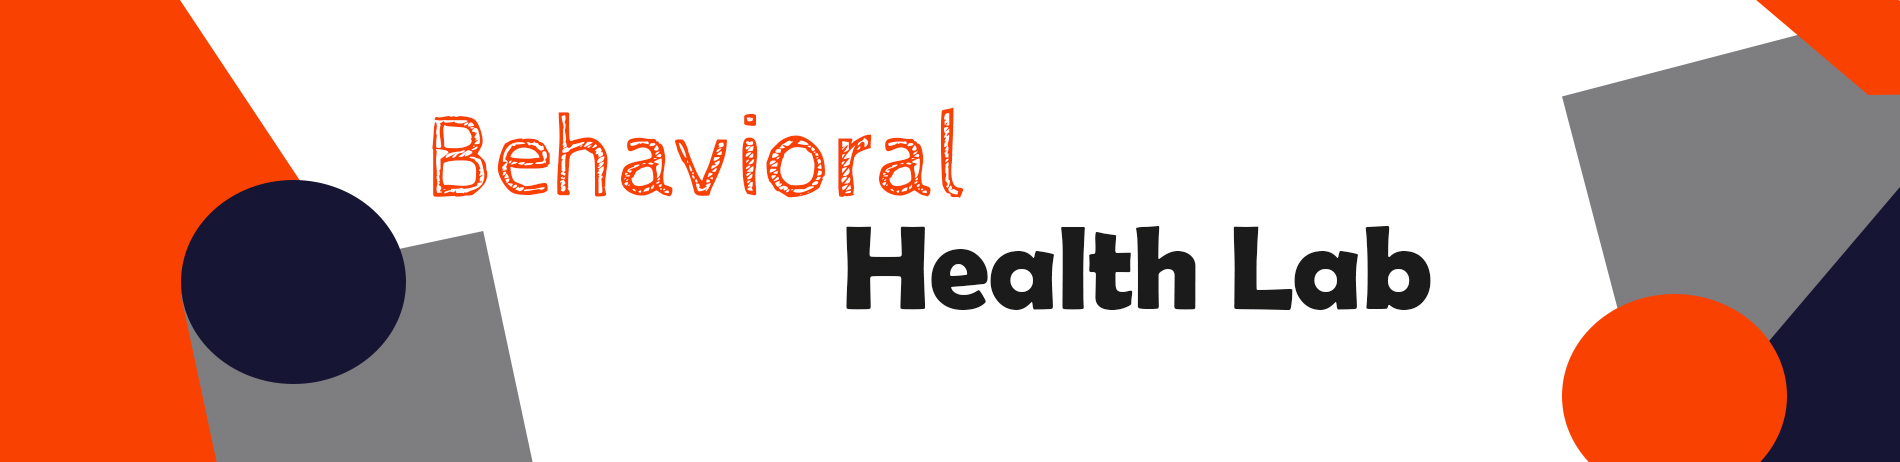 Behavioral Health Lab Banner Page Banner 